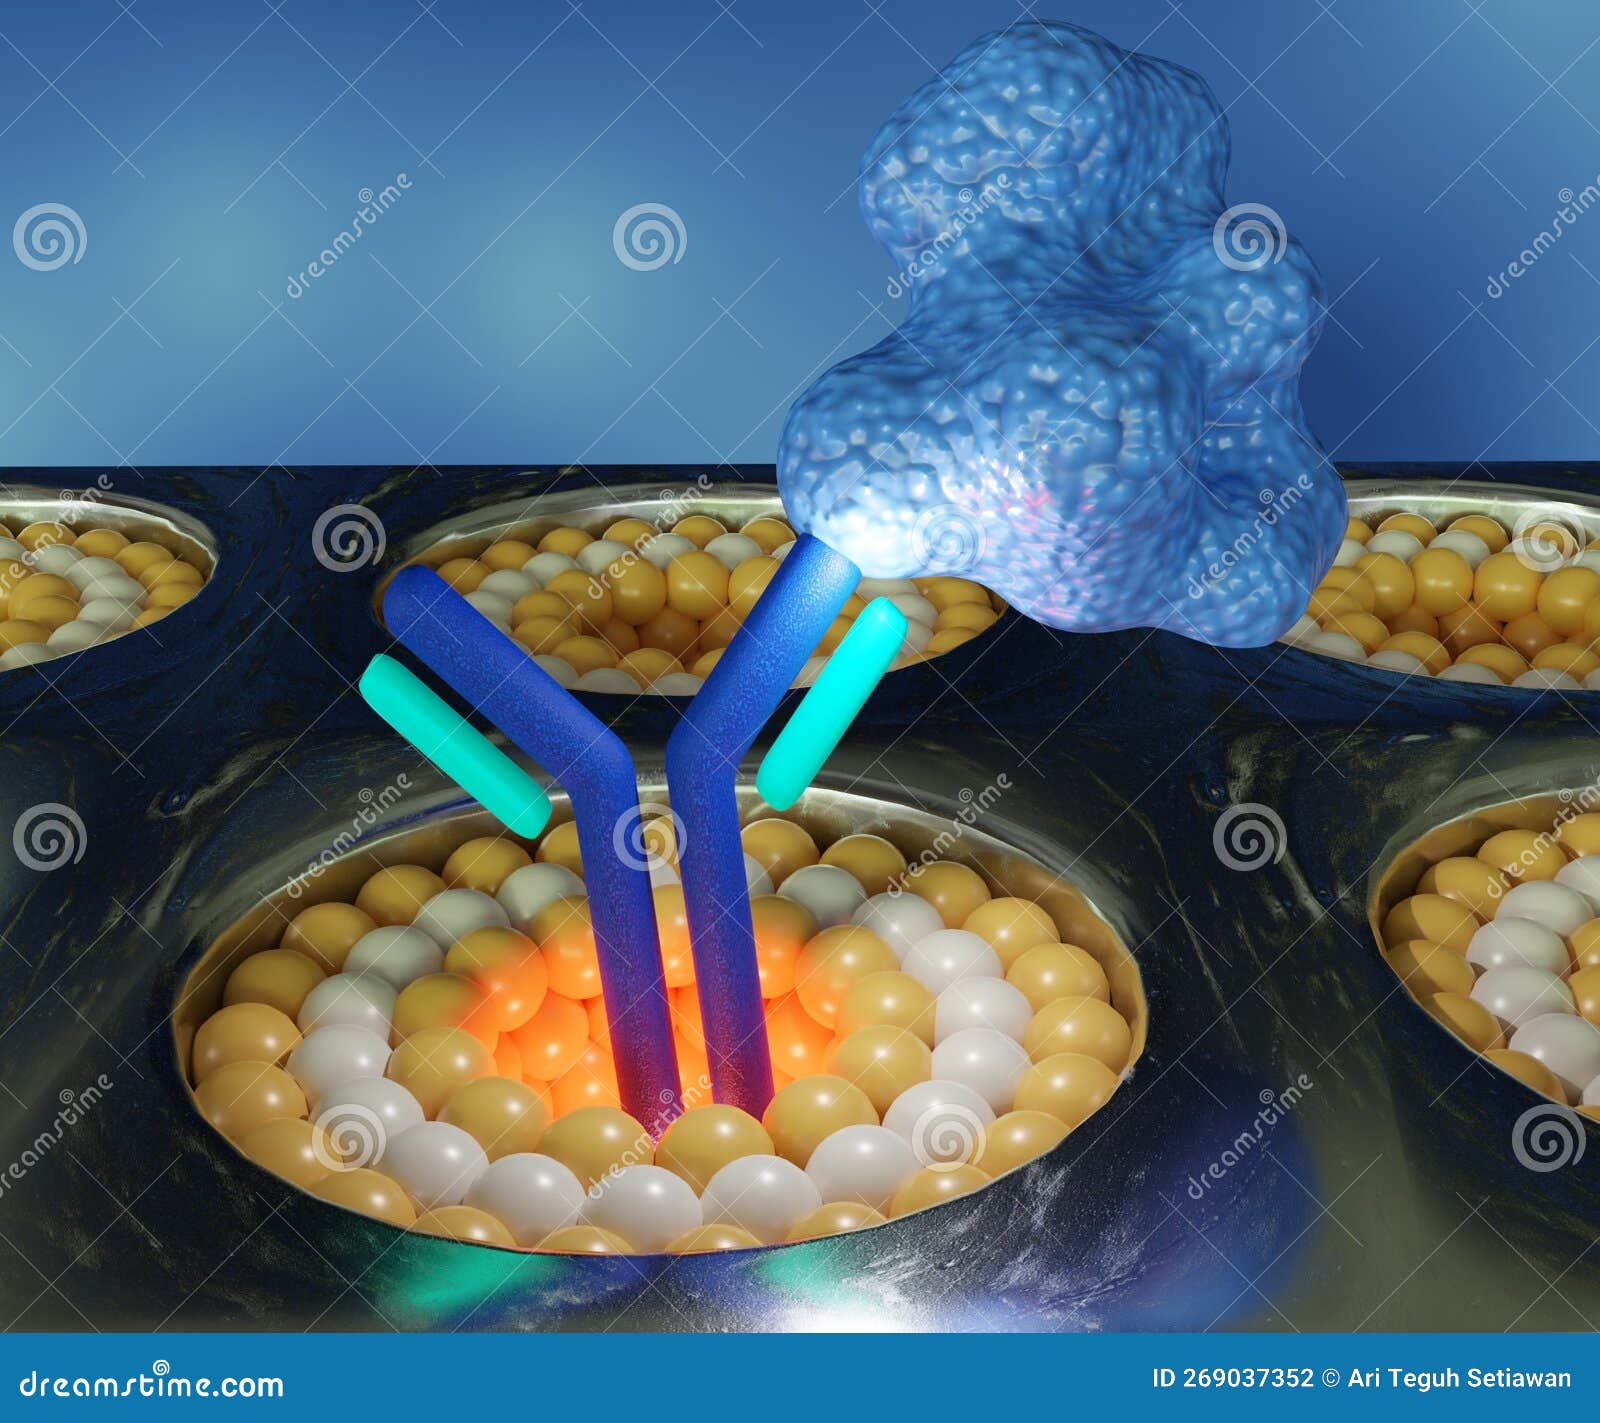 proteins as analytes conjugate on antibody molecule or receptor flow through metal film nanoholes of opto-fluidic biosensor